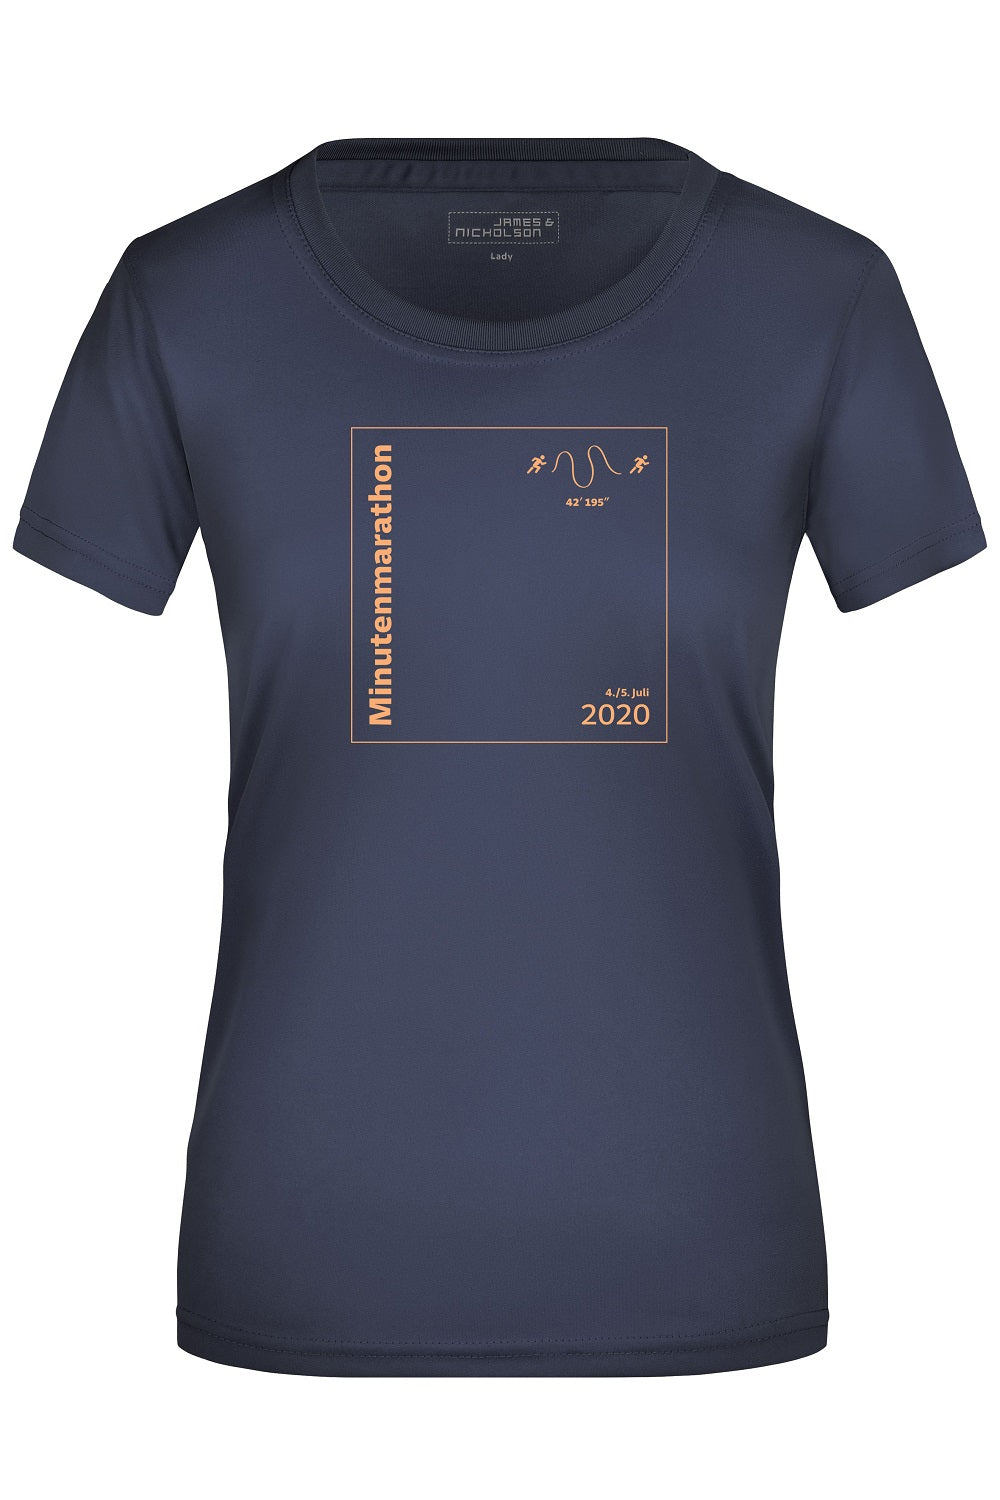 3XL - Damen SZ Laufshirt, blau, Minutenmarathon - Bild 1